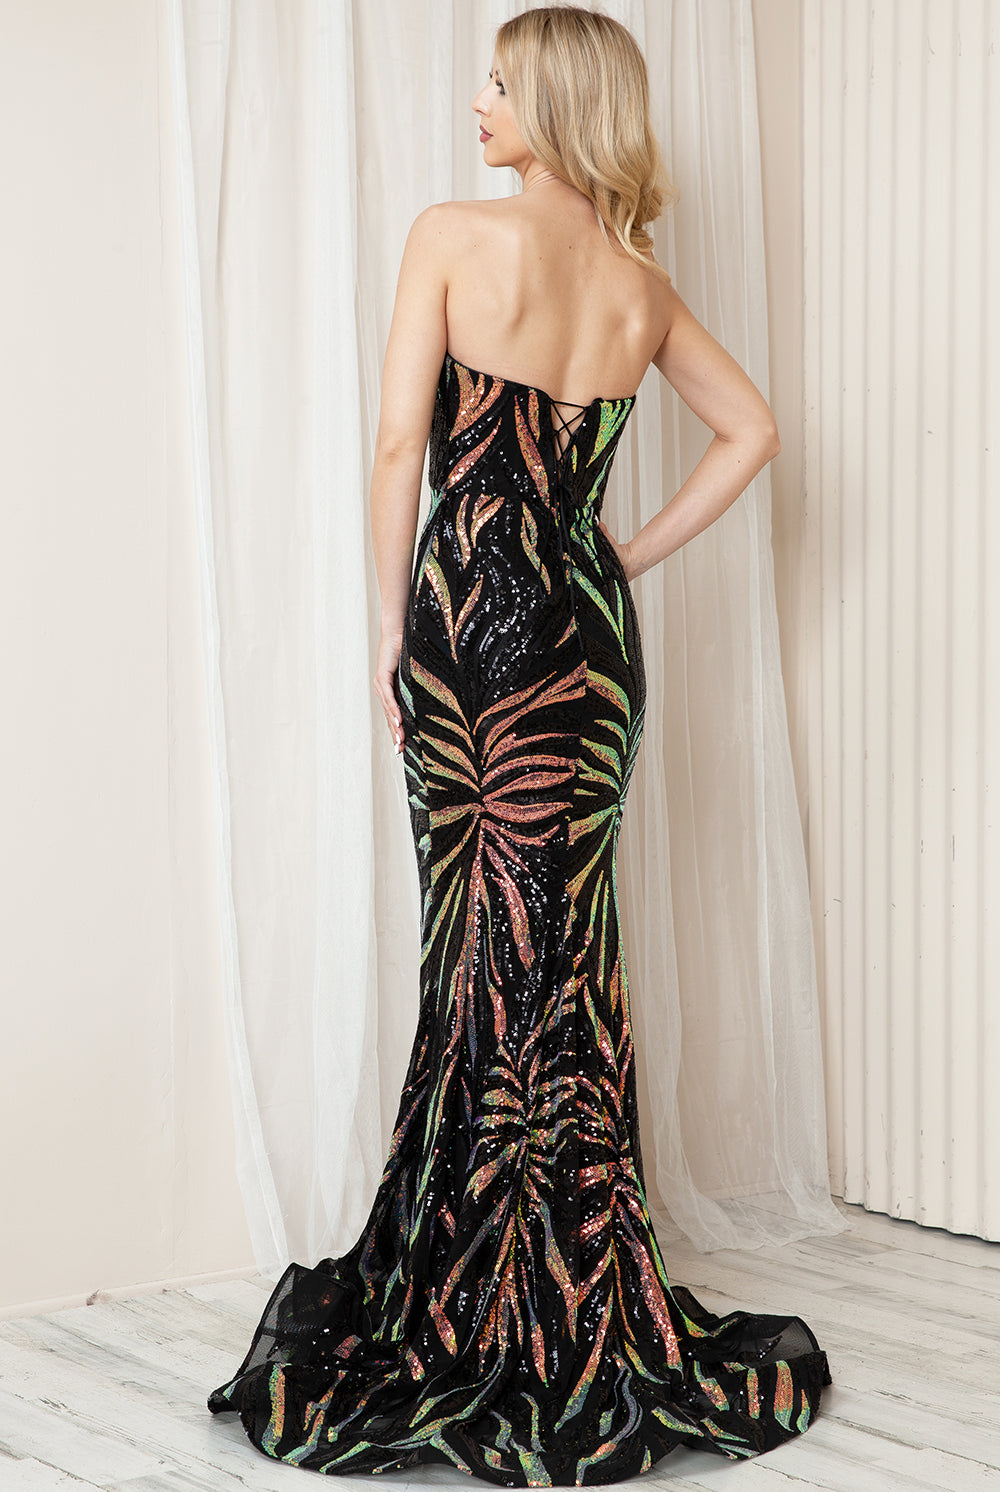 Embroidered Sequins Strapless Corset Back Long Prom Dress AC7028-Prom Dress-smcfashion.com